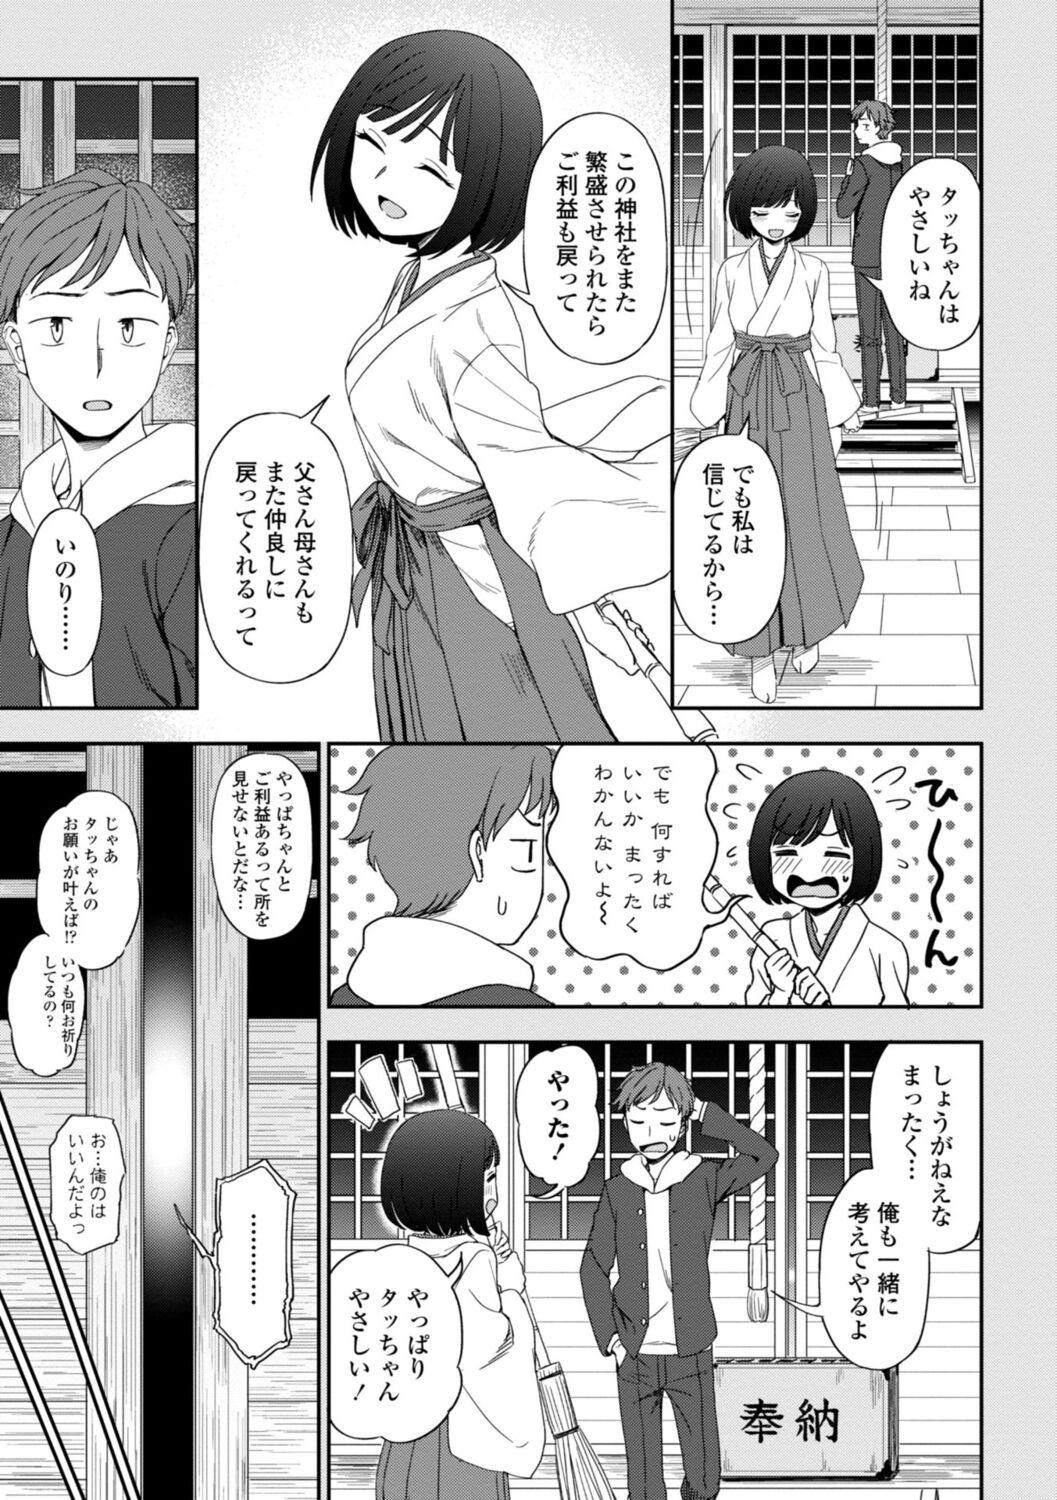 Soloboy Watashi no Subete Sasagemasu - I'll give you all of mine. Chastity - Page 7